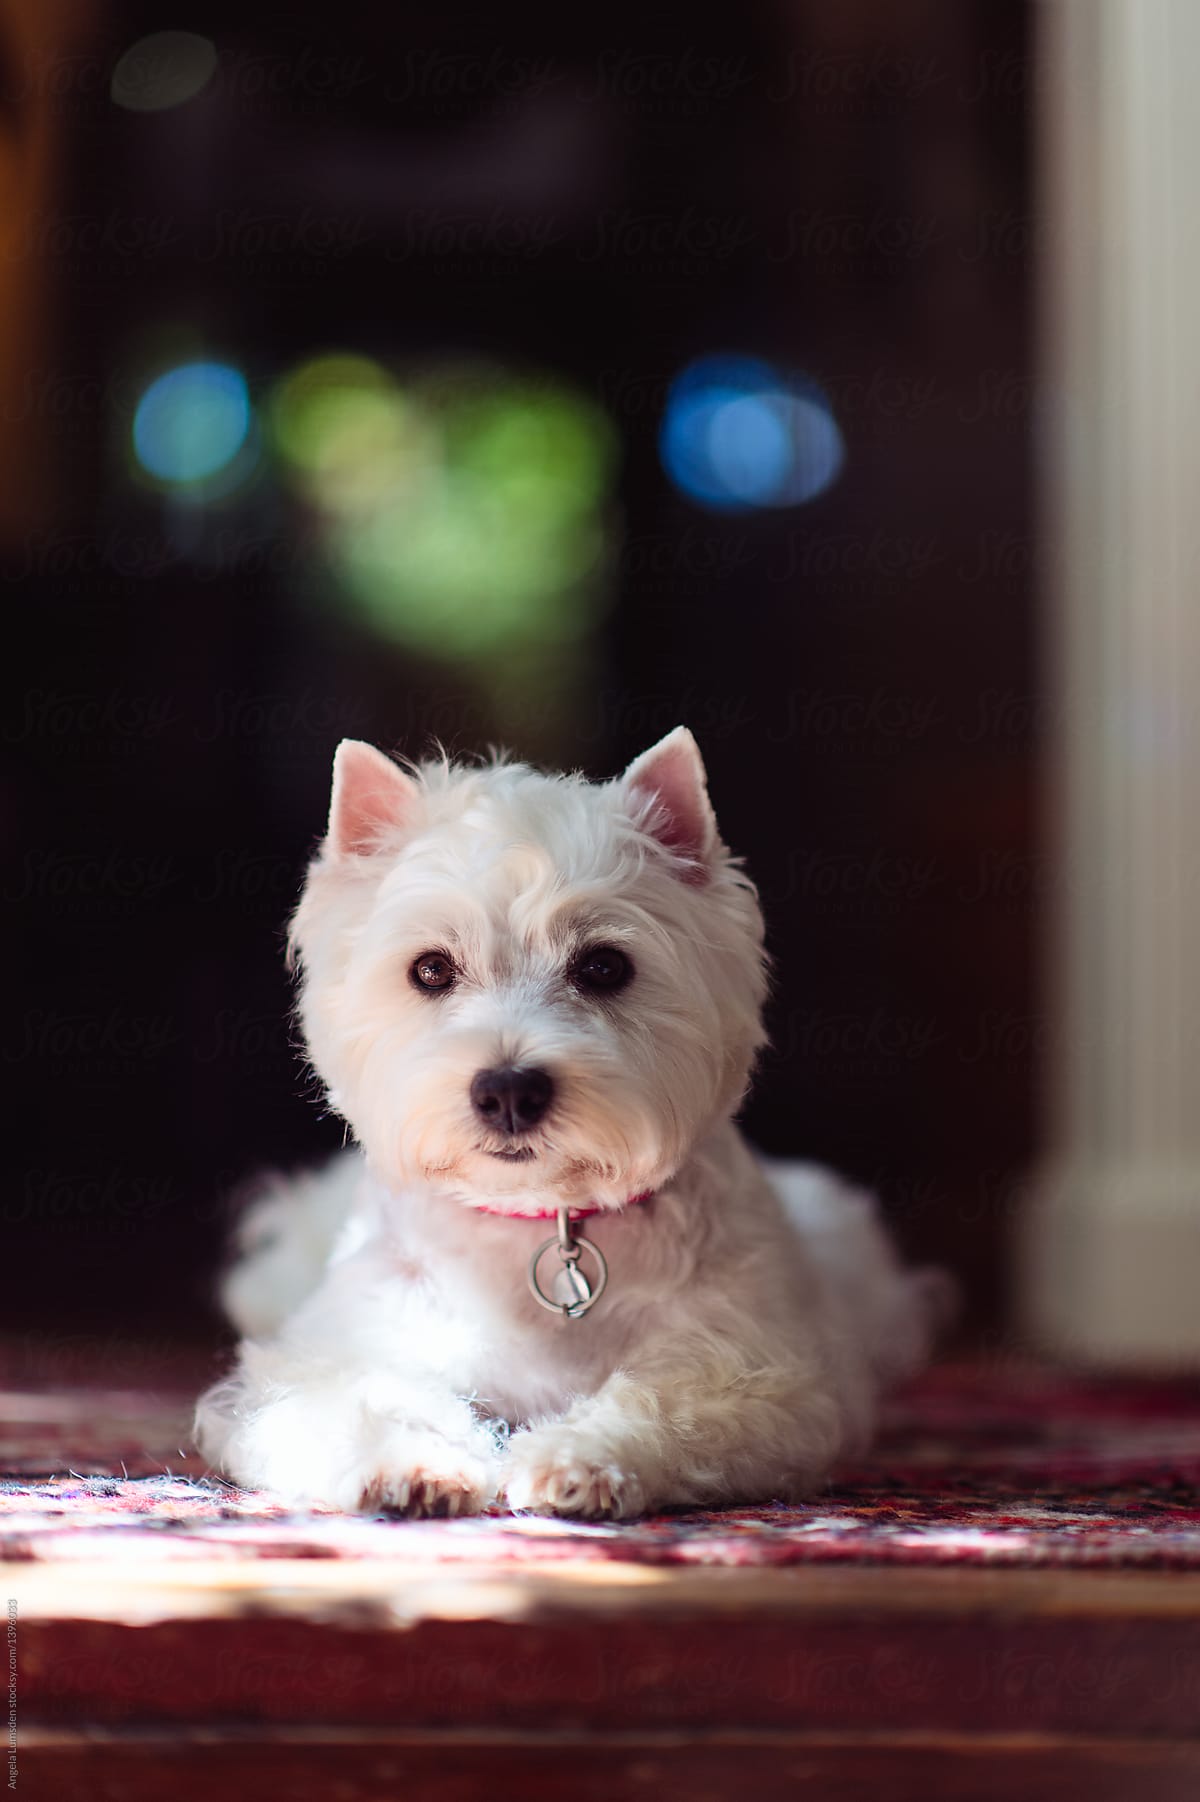 Clean white dog sitting prettily on a rug